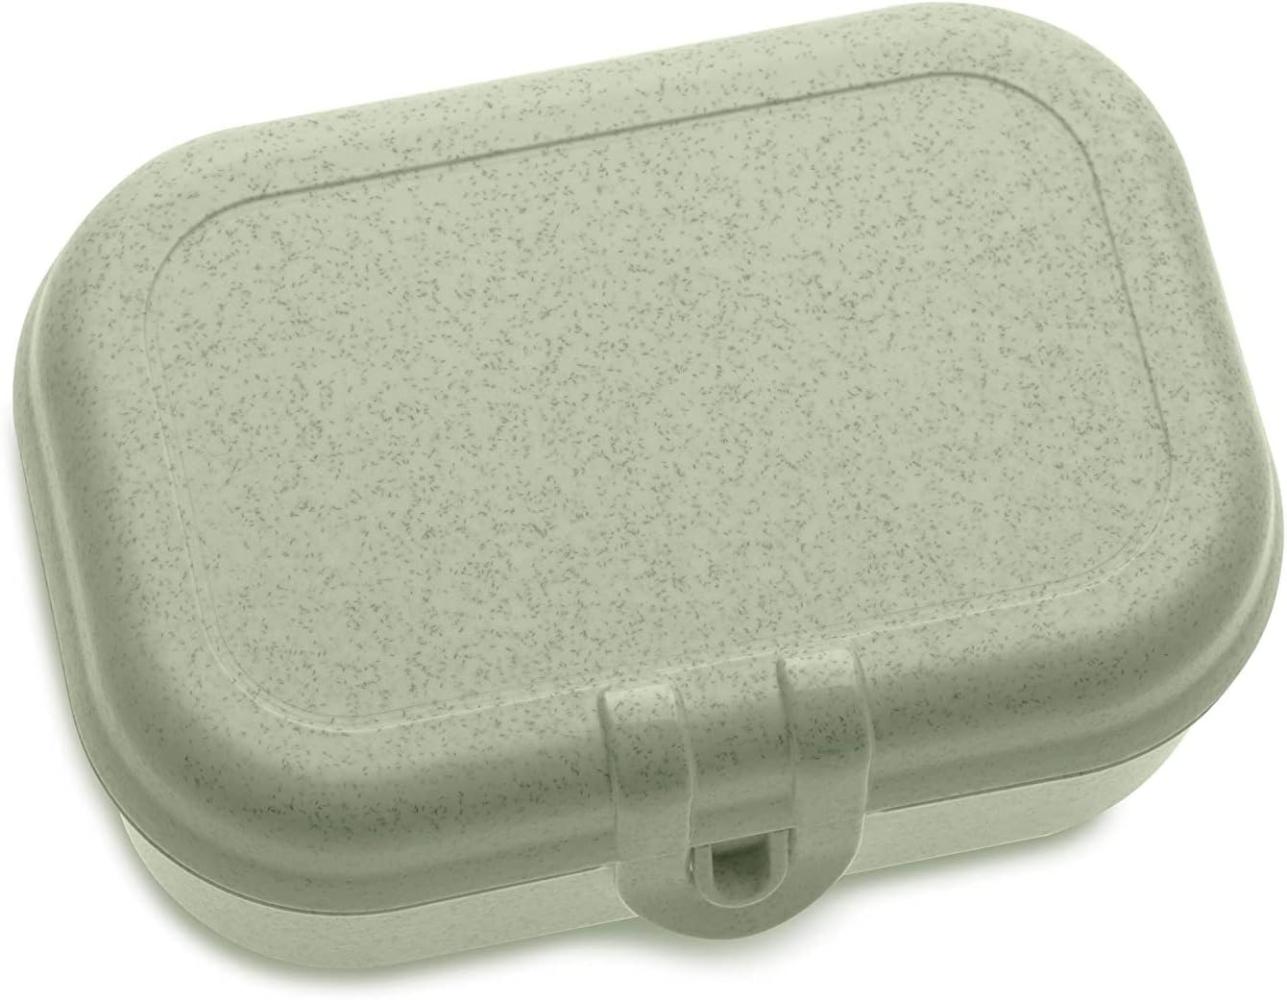 Koziol Pascal S Lunchbox, Behälter, Vorratsbehälter, Brotbox, Brotdose, Kunststoff, Organic Green, 15. 1 cm, 3158668 Bild 1